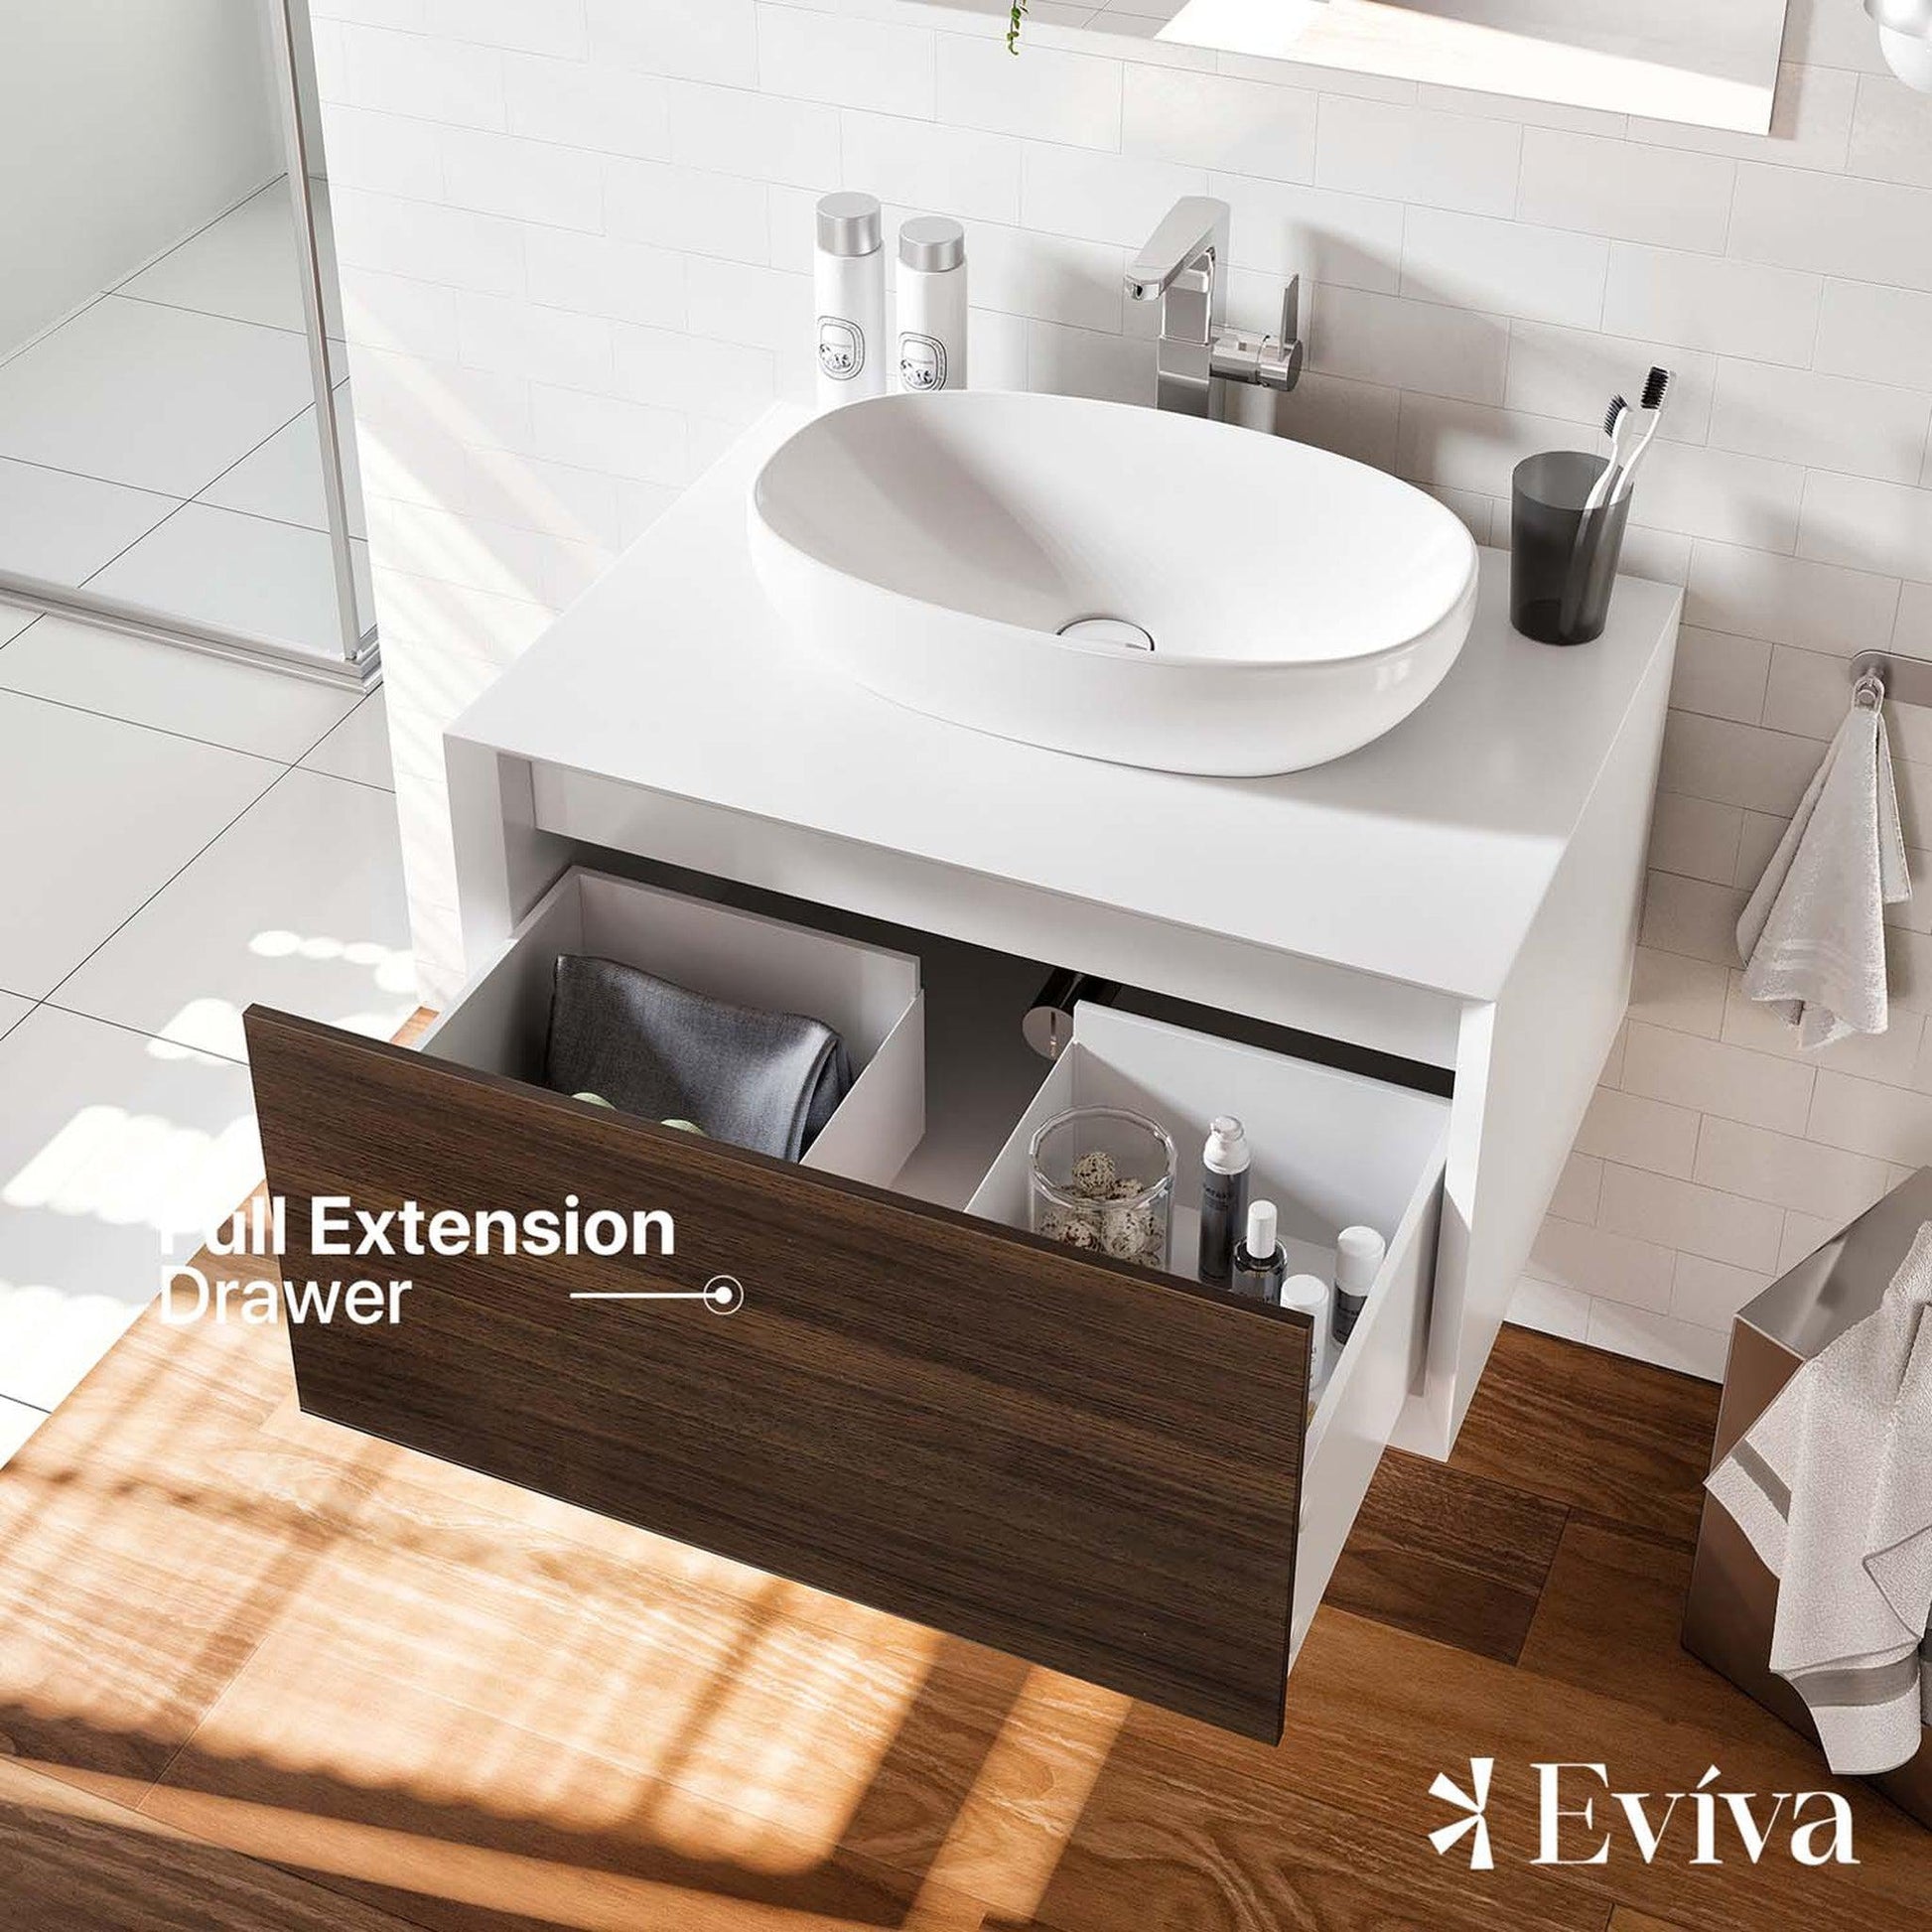 Eviva Santa Monica 36" x 16" Gray Oak Wall-Mounted Bathroom Vanity With White Porcelain Vessel Sink